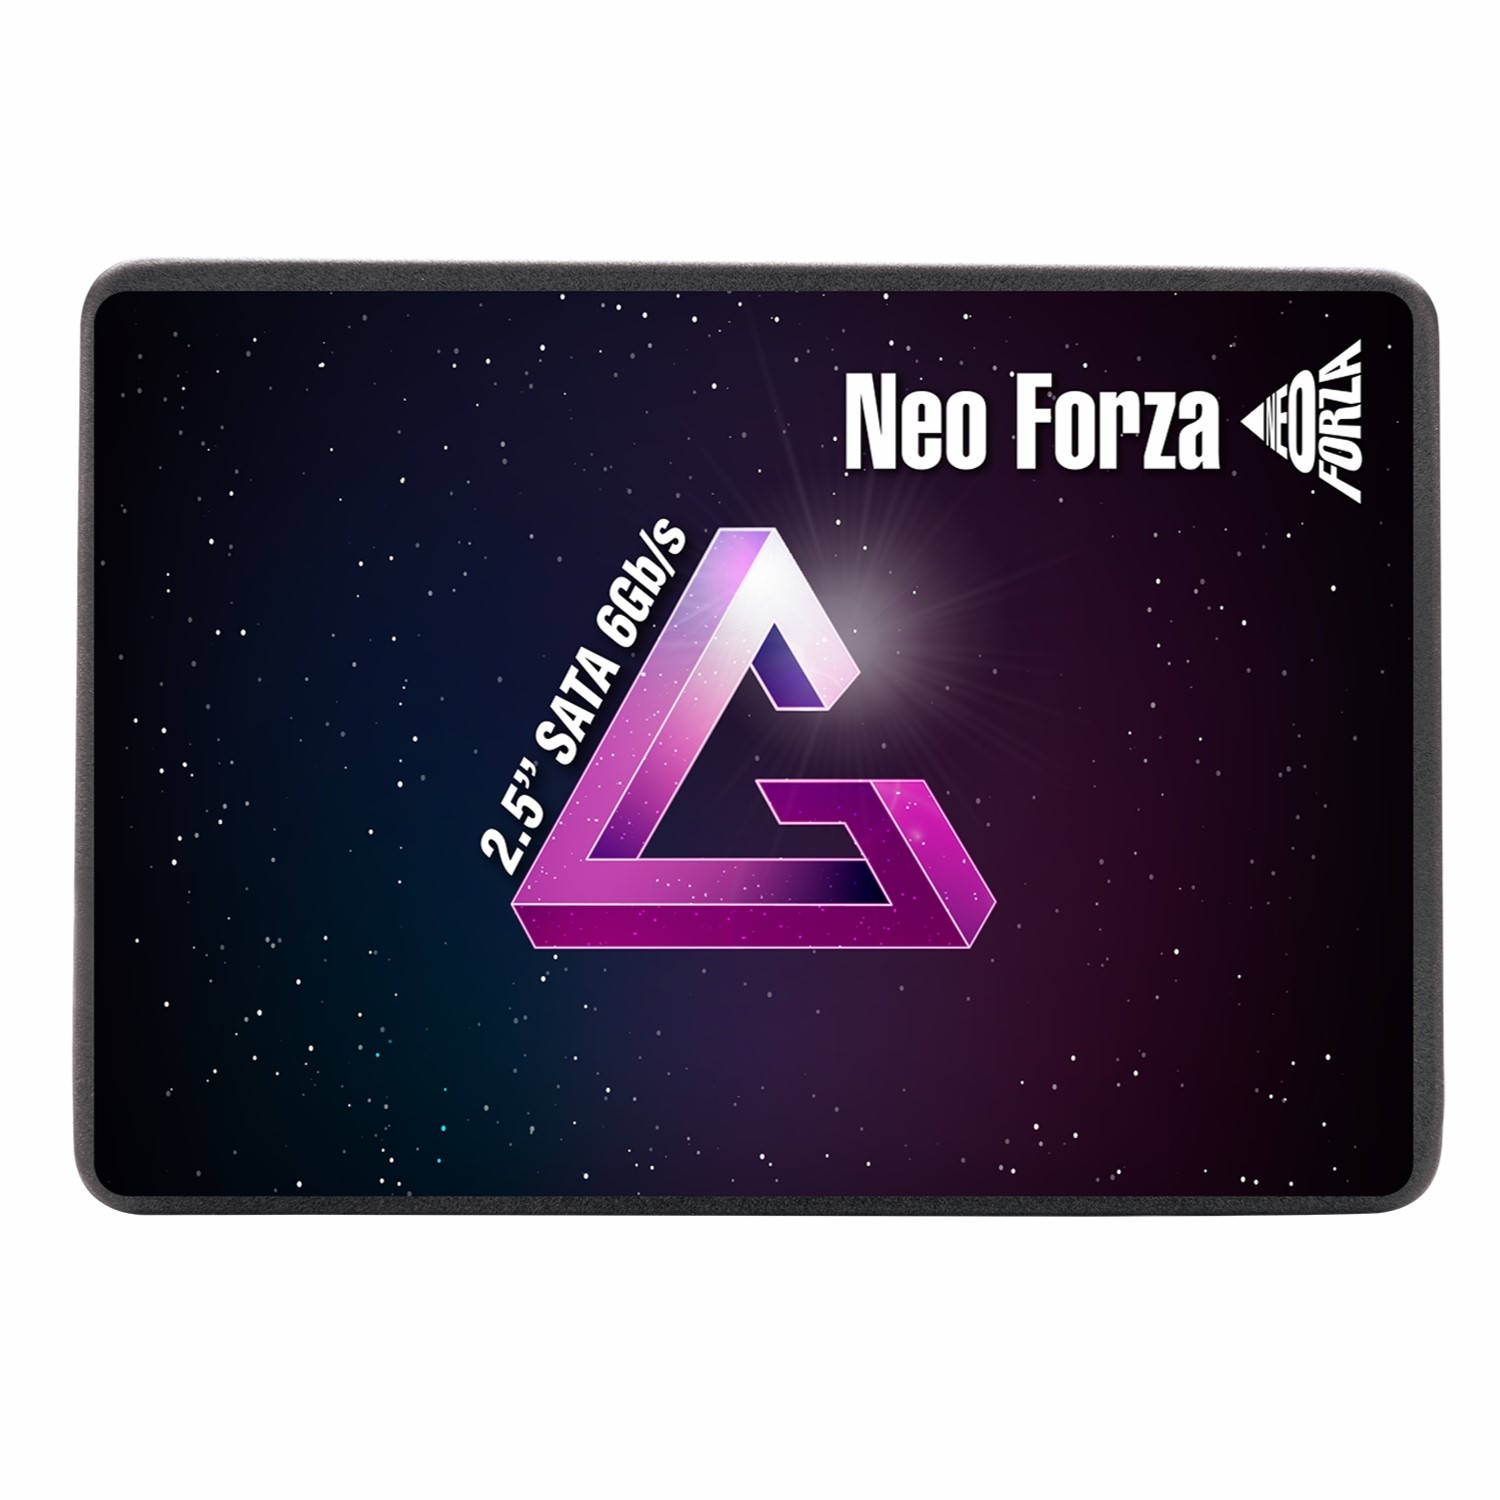 حافظه اس اس دی Neo Forza NFS01 256GB